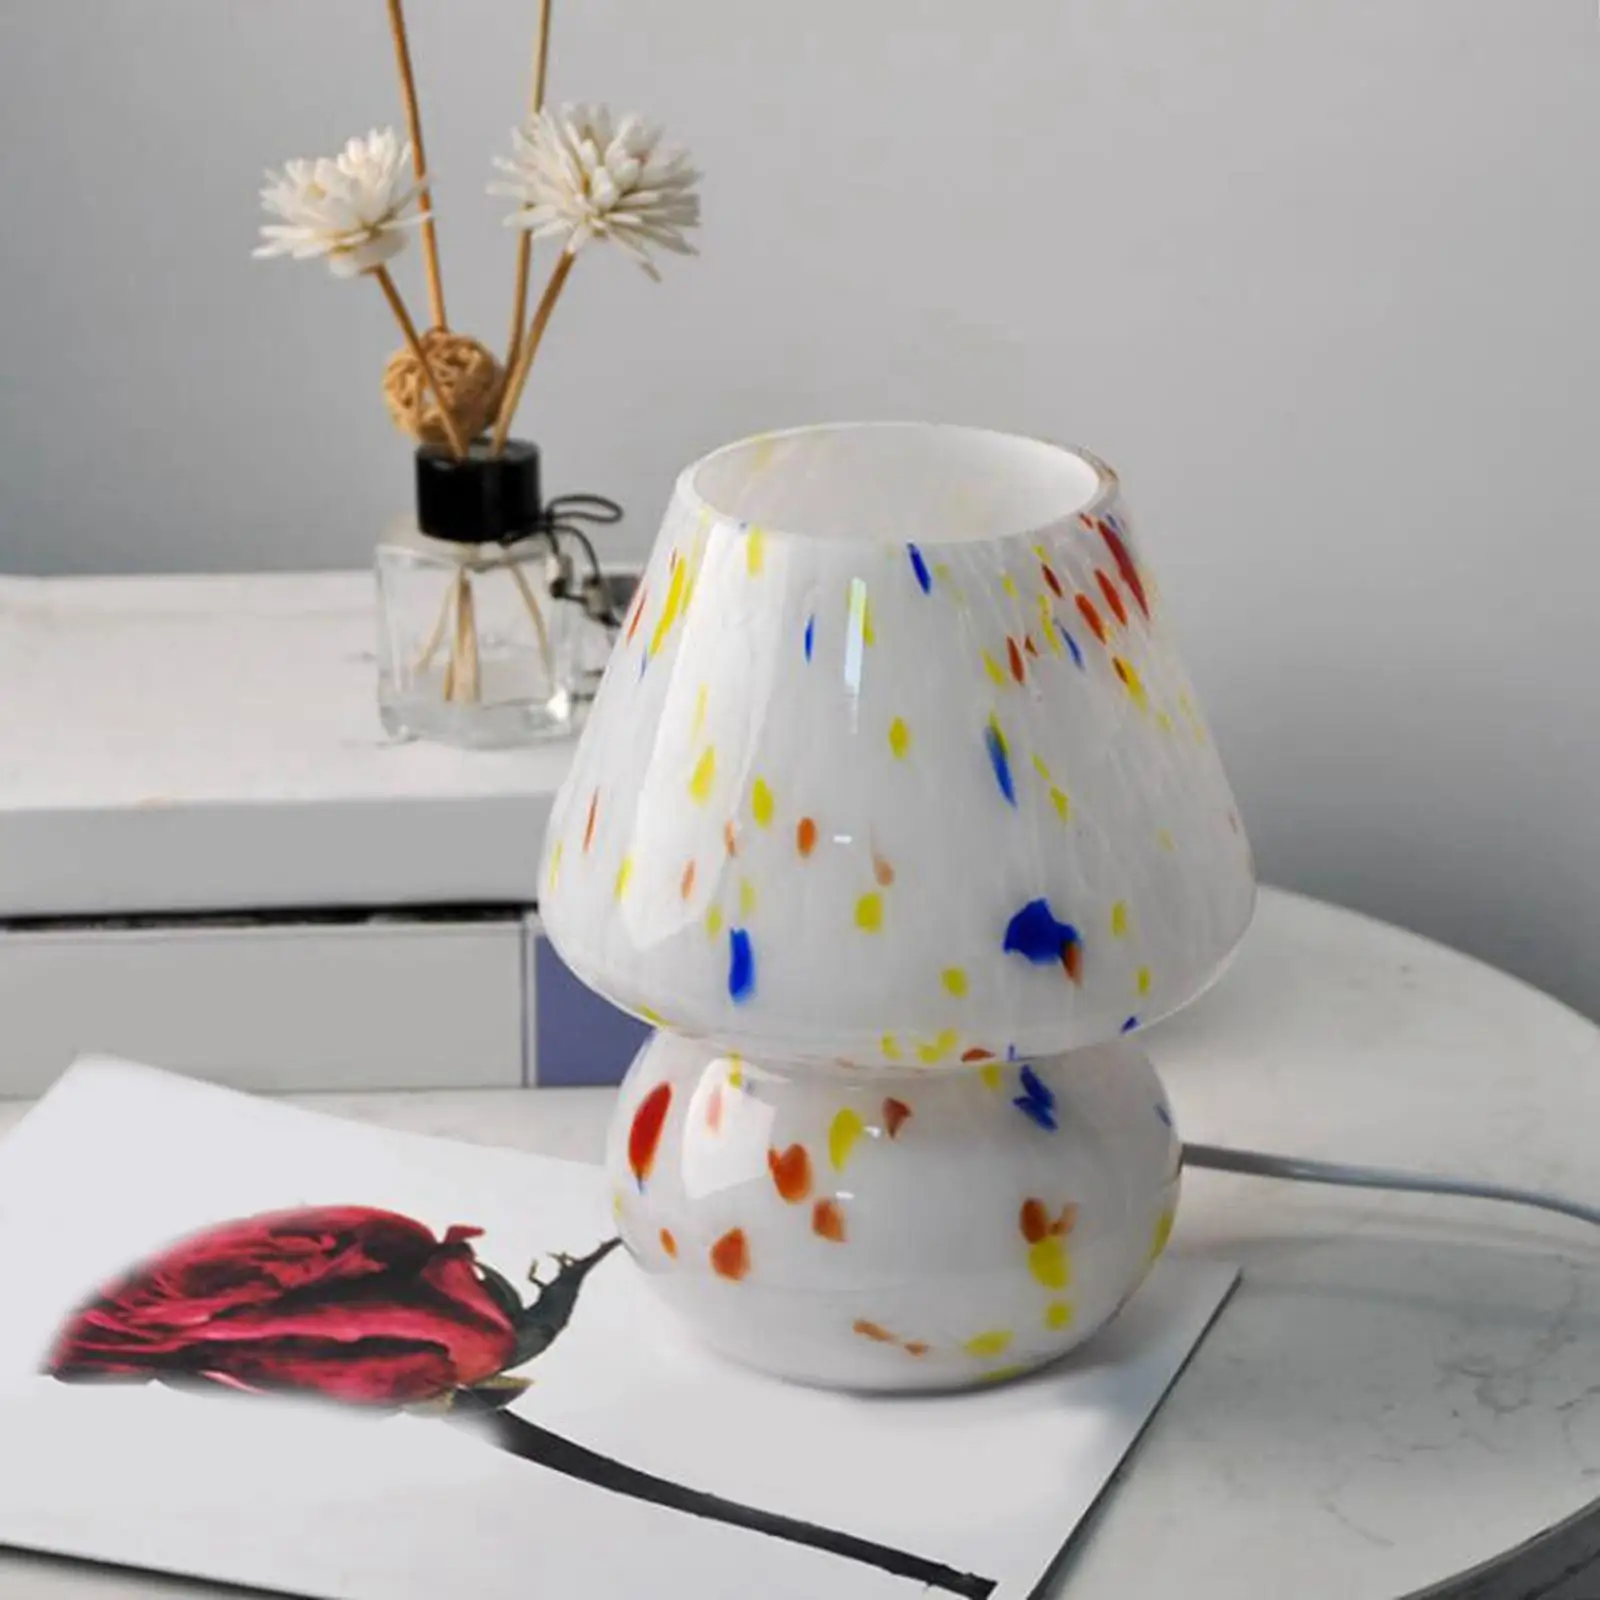 Table Lamp NightLights LED Bedside Study Decorative Warm Lights USB